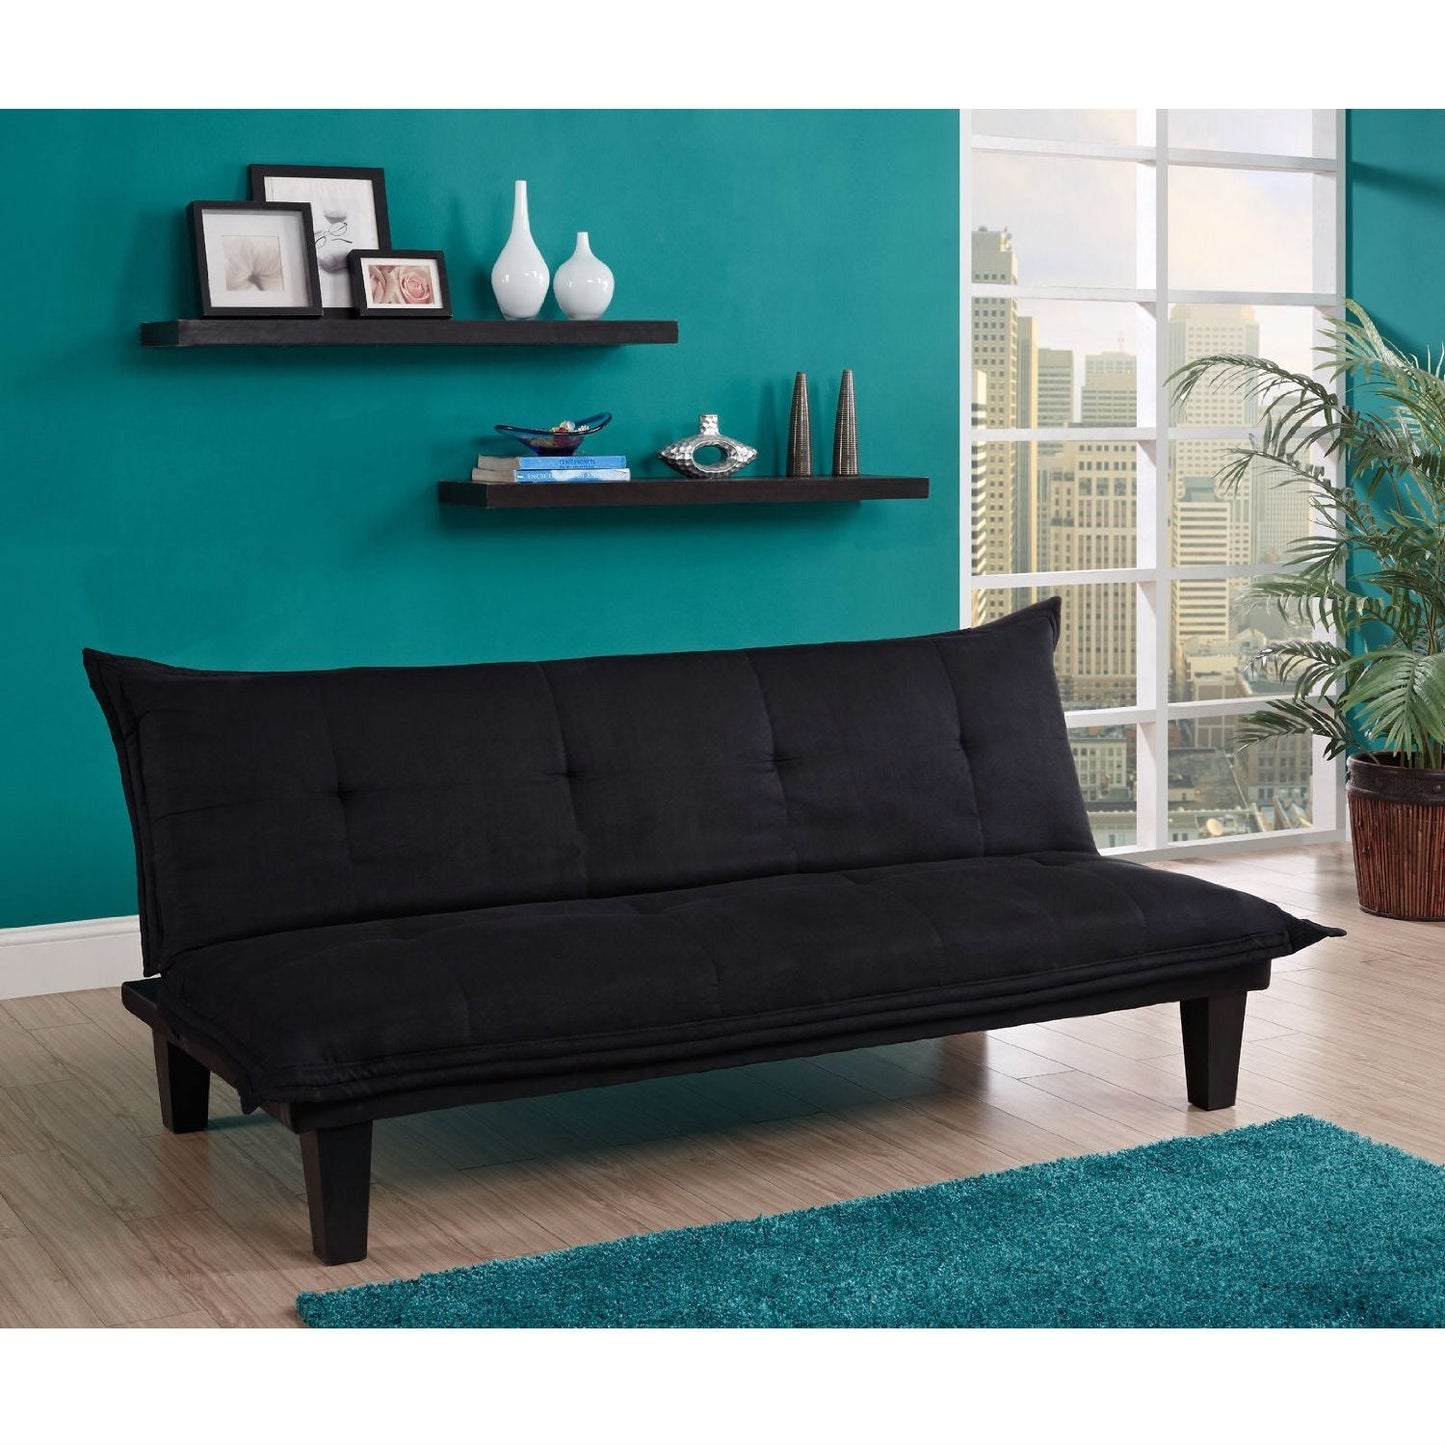 Living Room > Sofas - Black Microfiber Click-Clack Sleeper Sofa Bed Futon Lounger